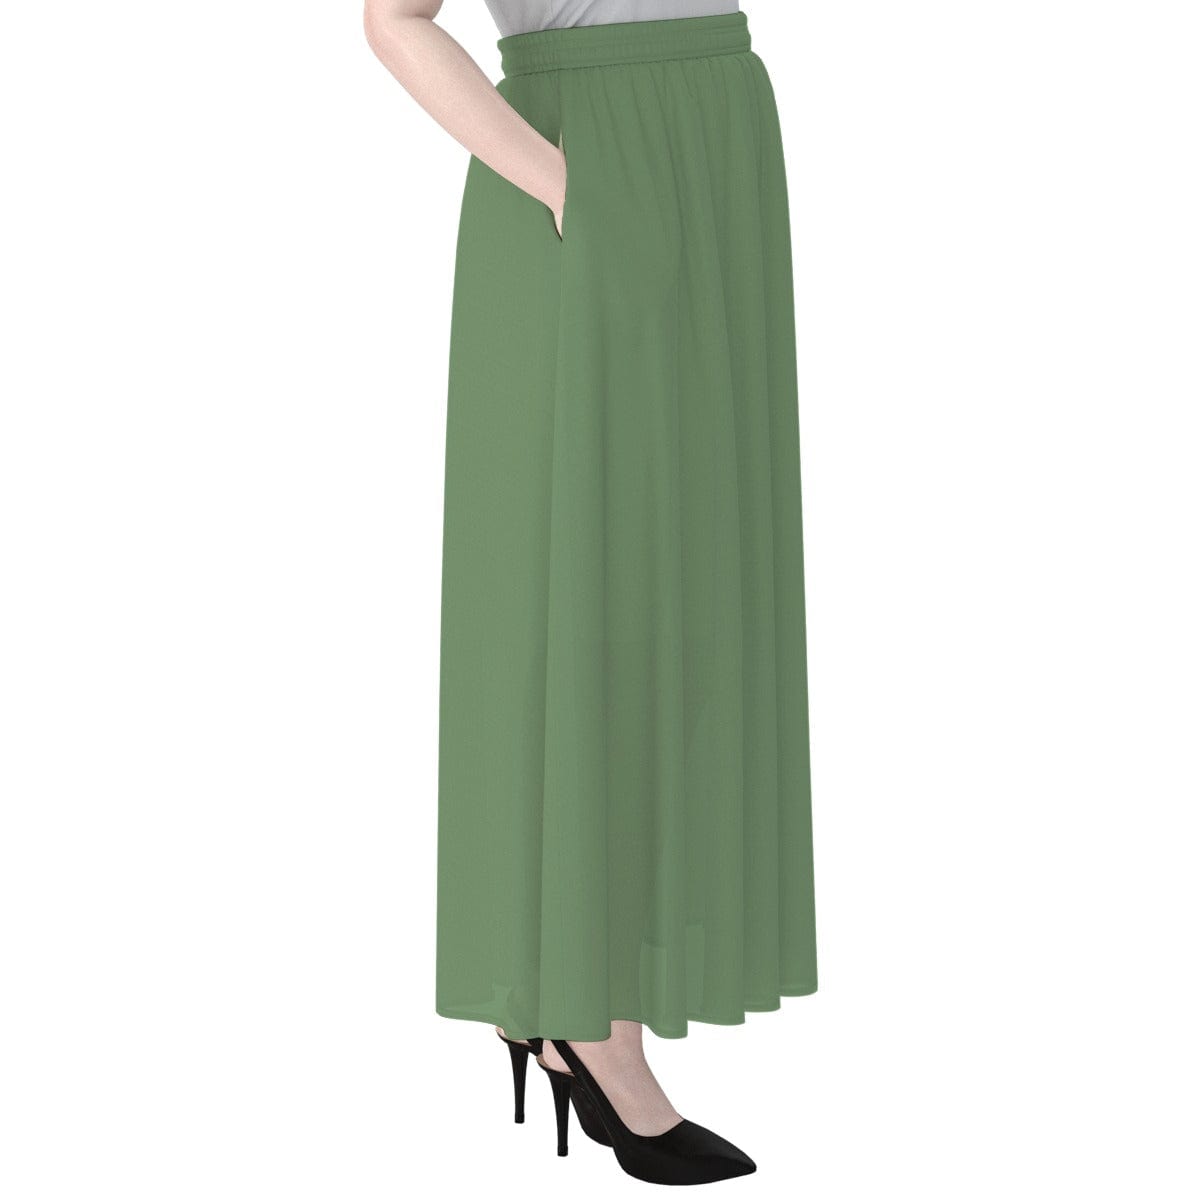 Yoycol Ecru Black Daisy Green - Women's Maxi Chiffon Skirts With Lining